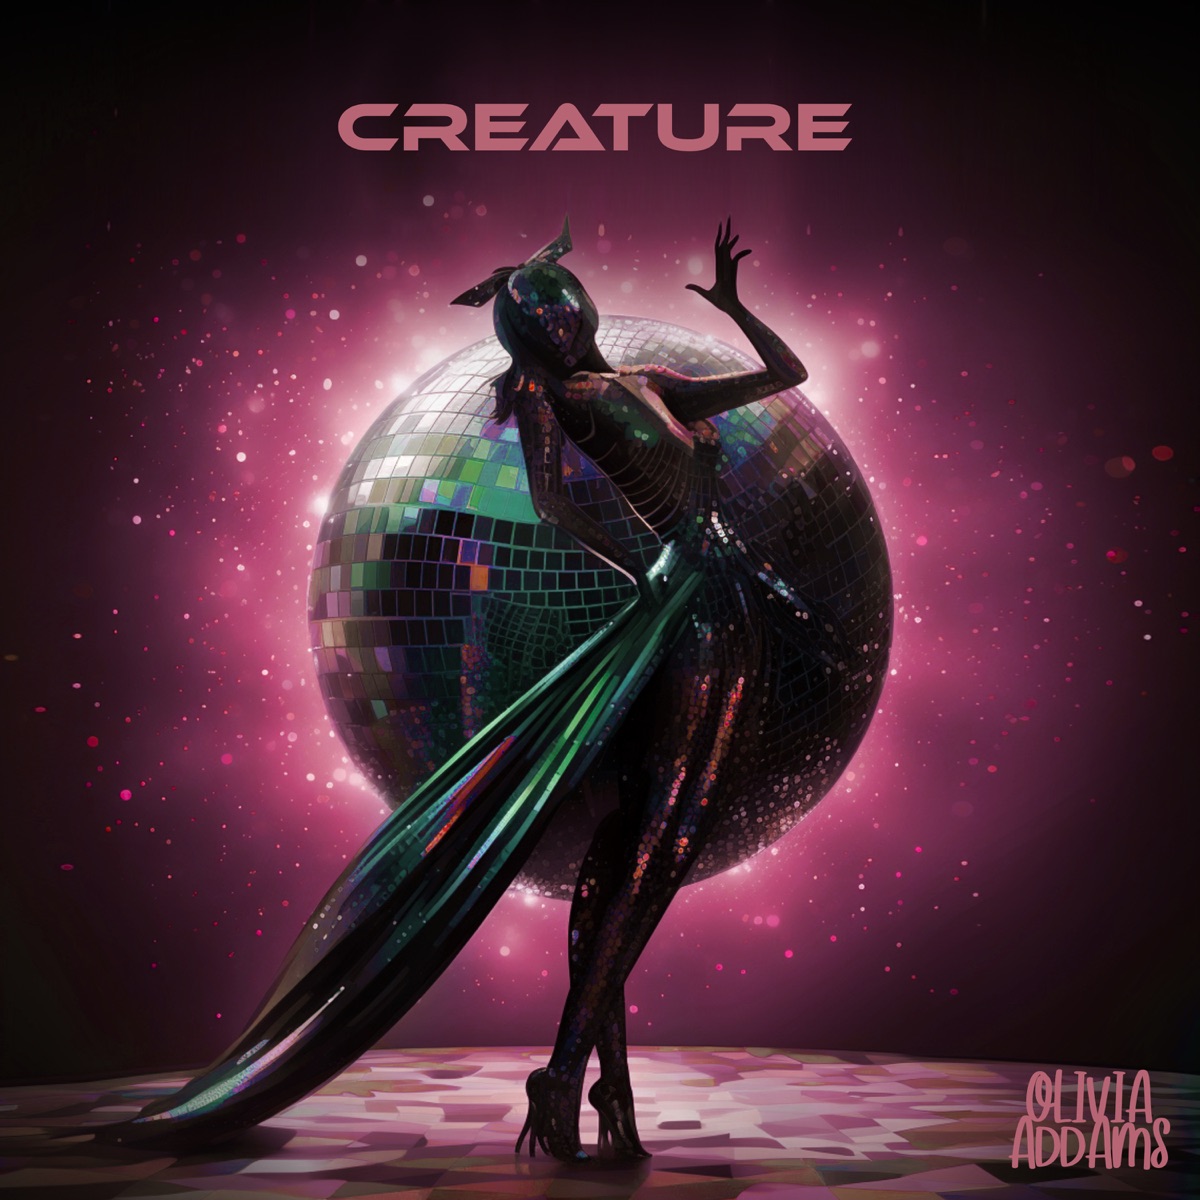 Olivia Addams — Creature cover artwork